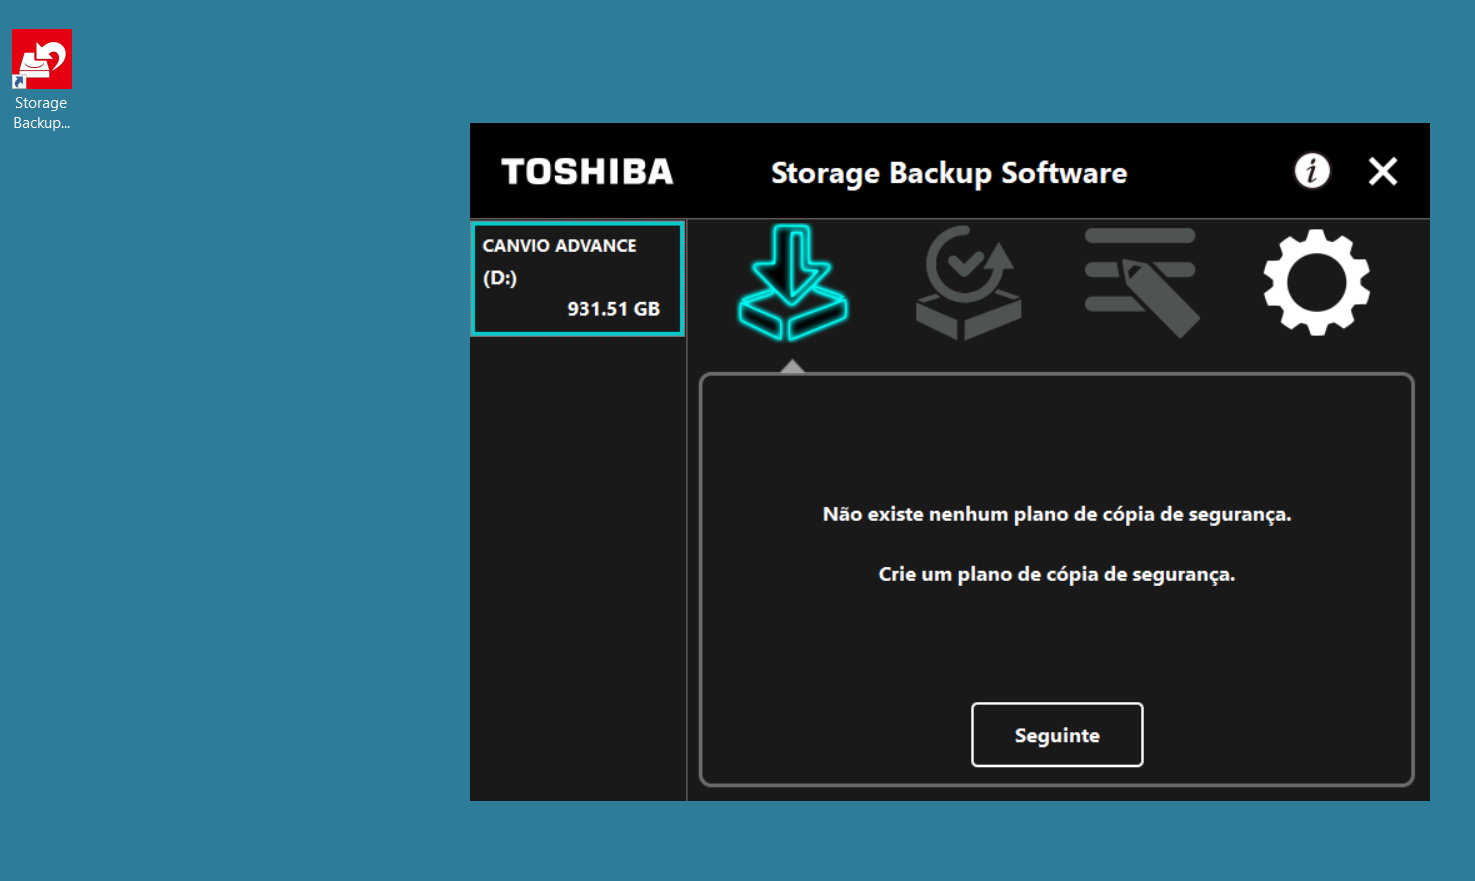 Toshiba external HDD Backup Software does not run